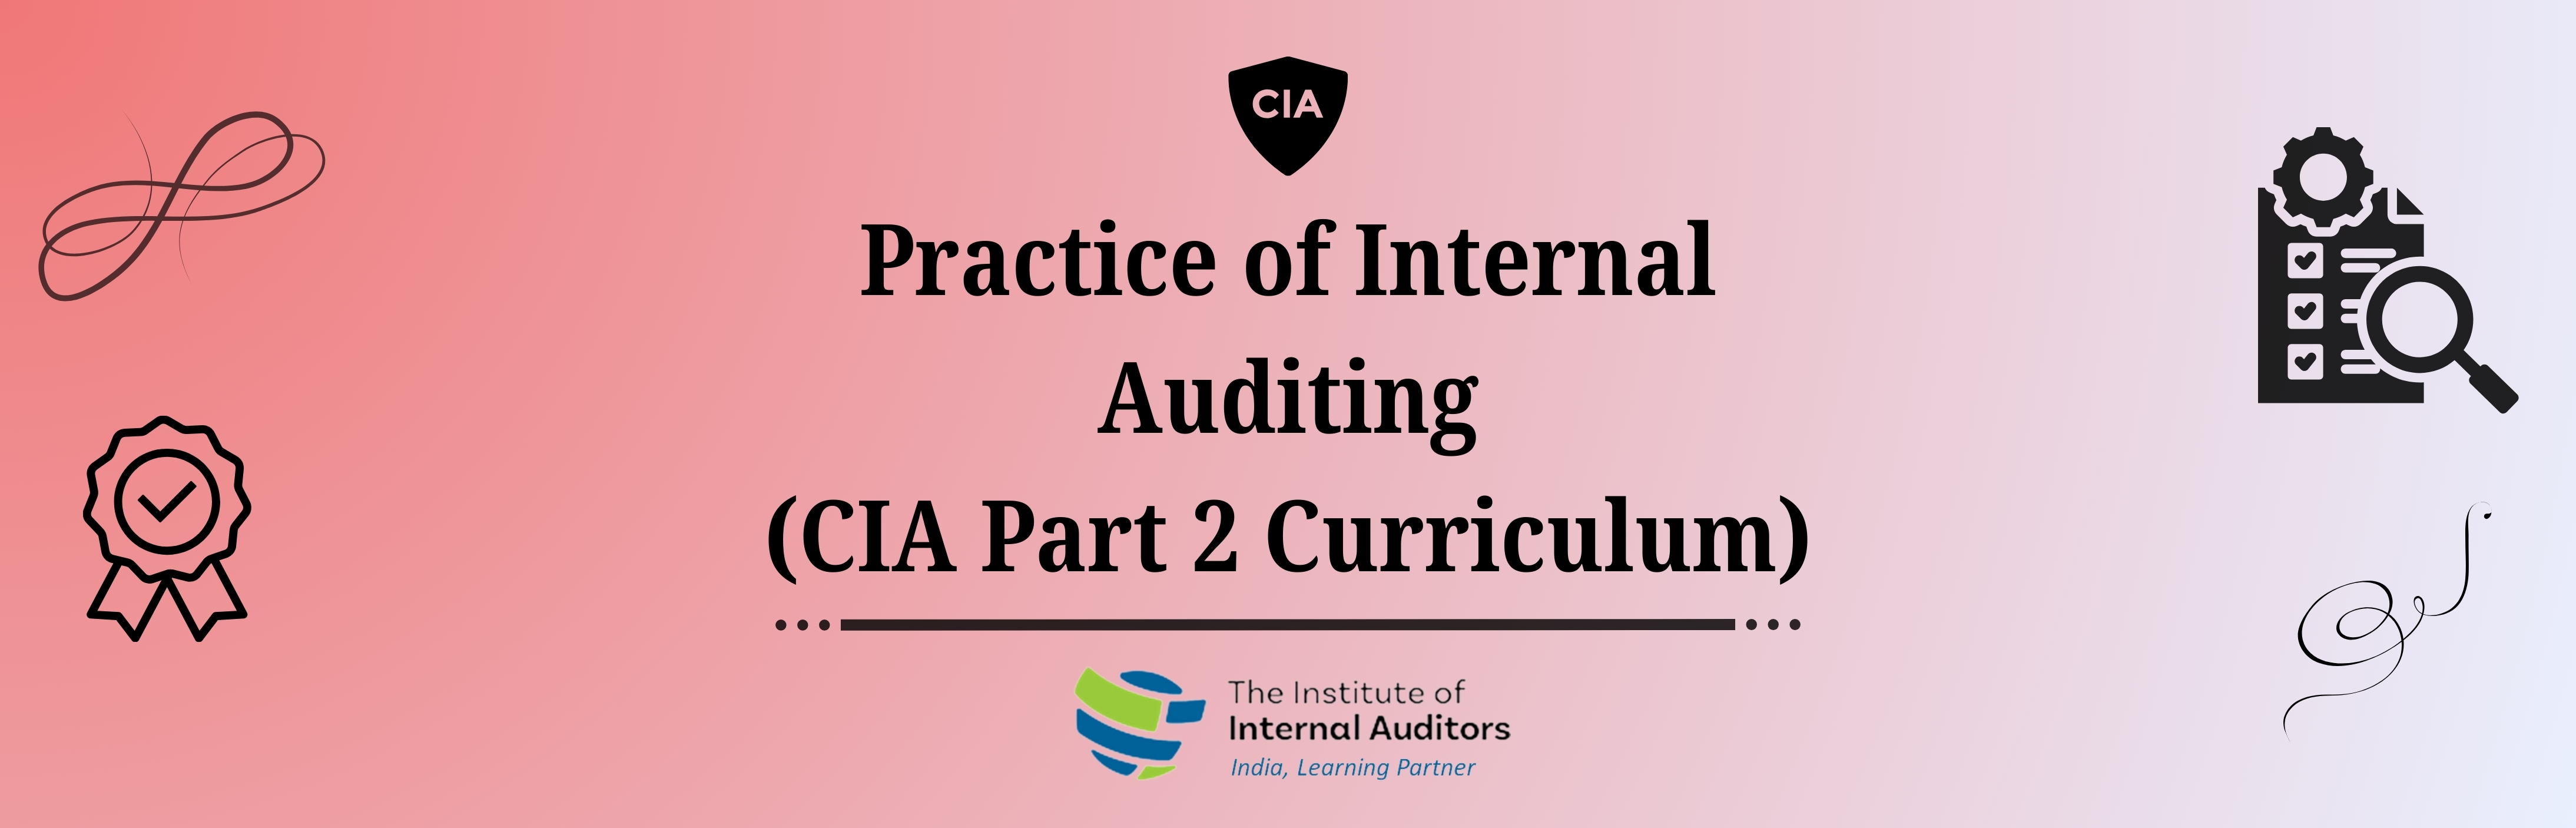 Practice of Internal Auditing (CIA Part 2 Curriculum)